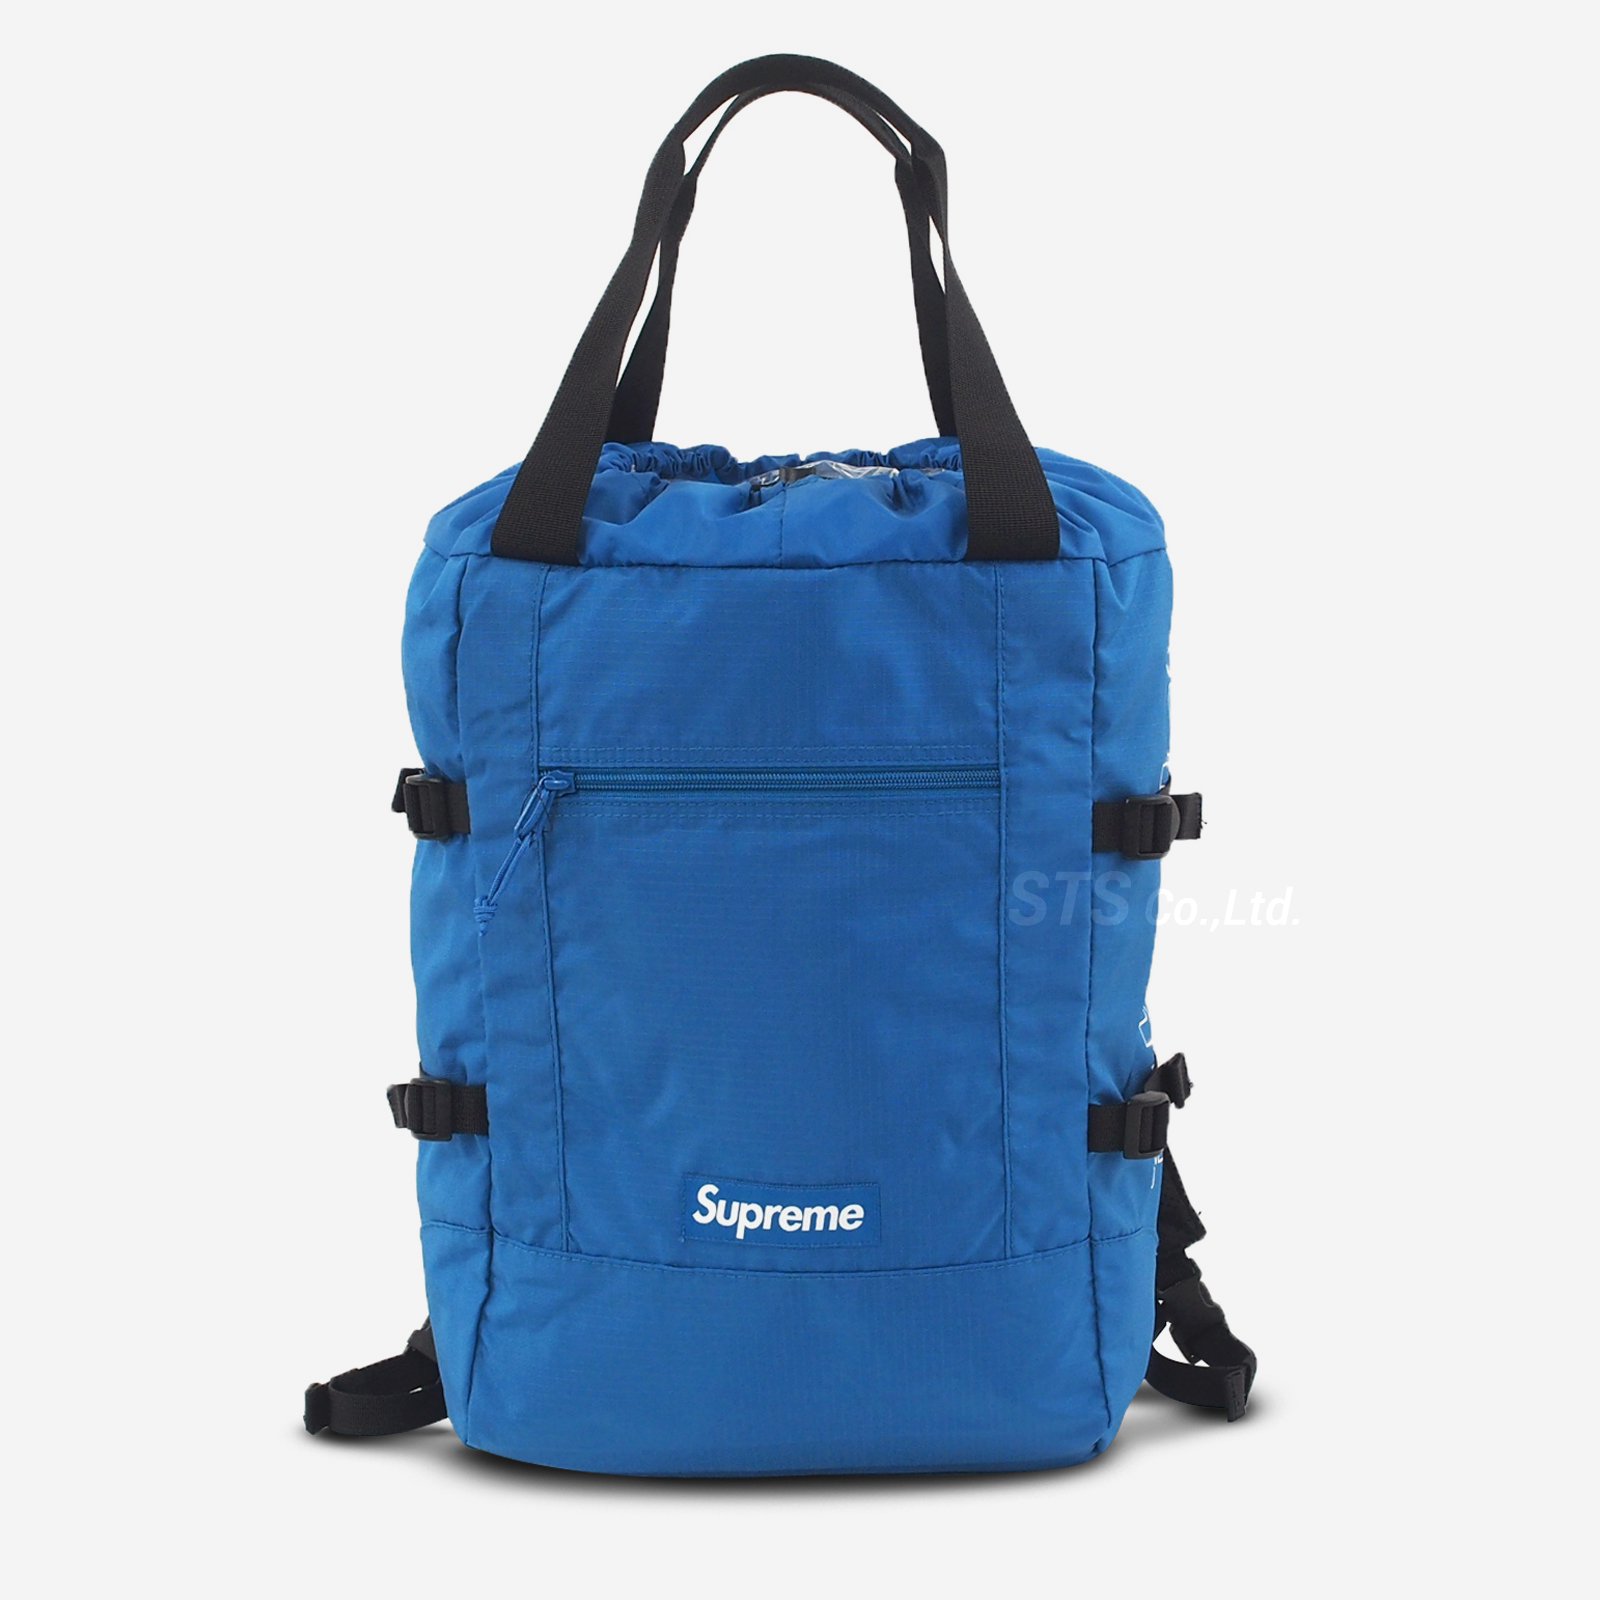 supreme tote backpack Royal トートバッグ week9